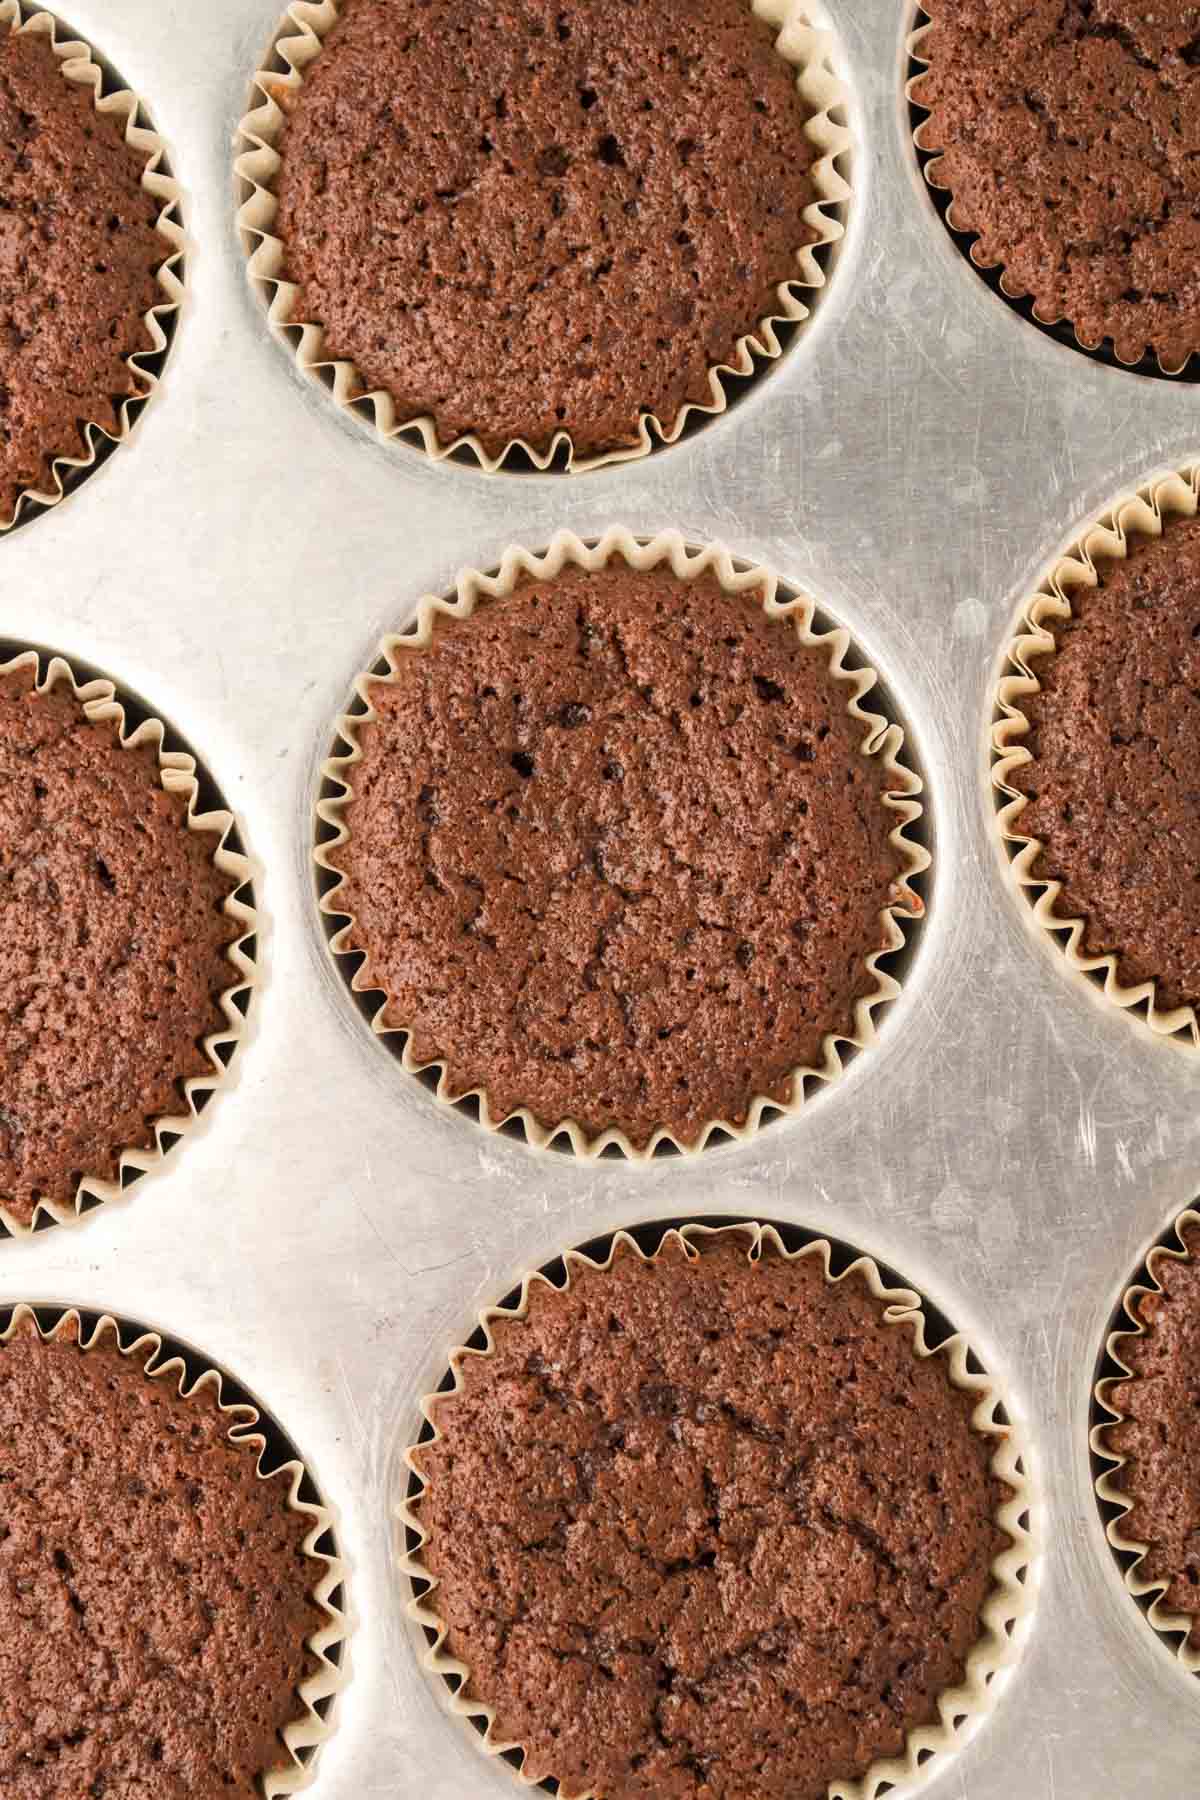 baked Samoa cupcakes in a muffin tin